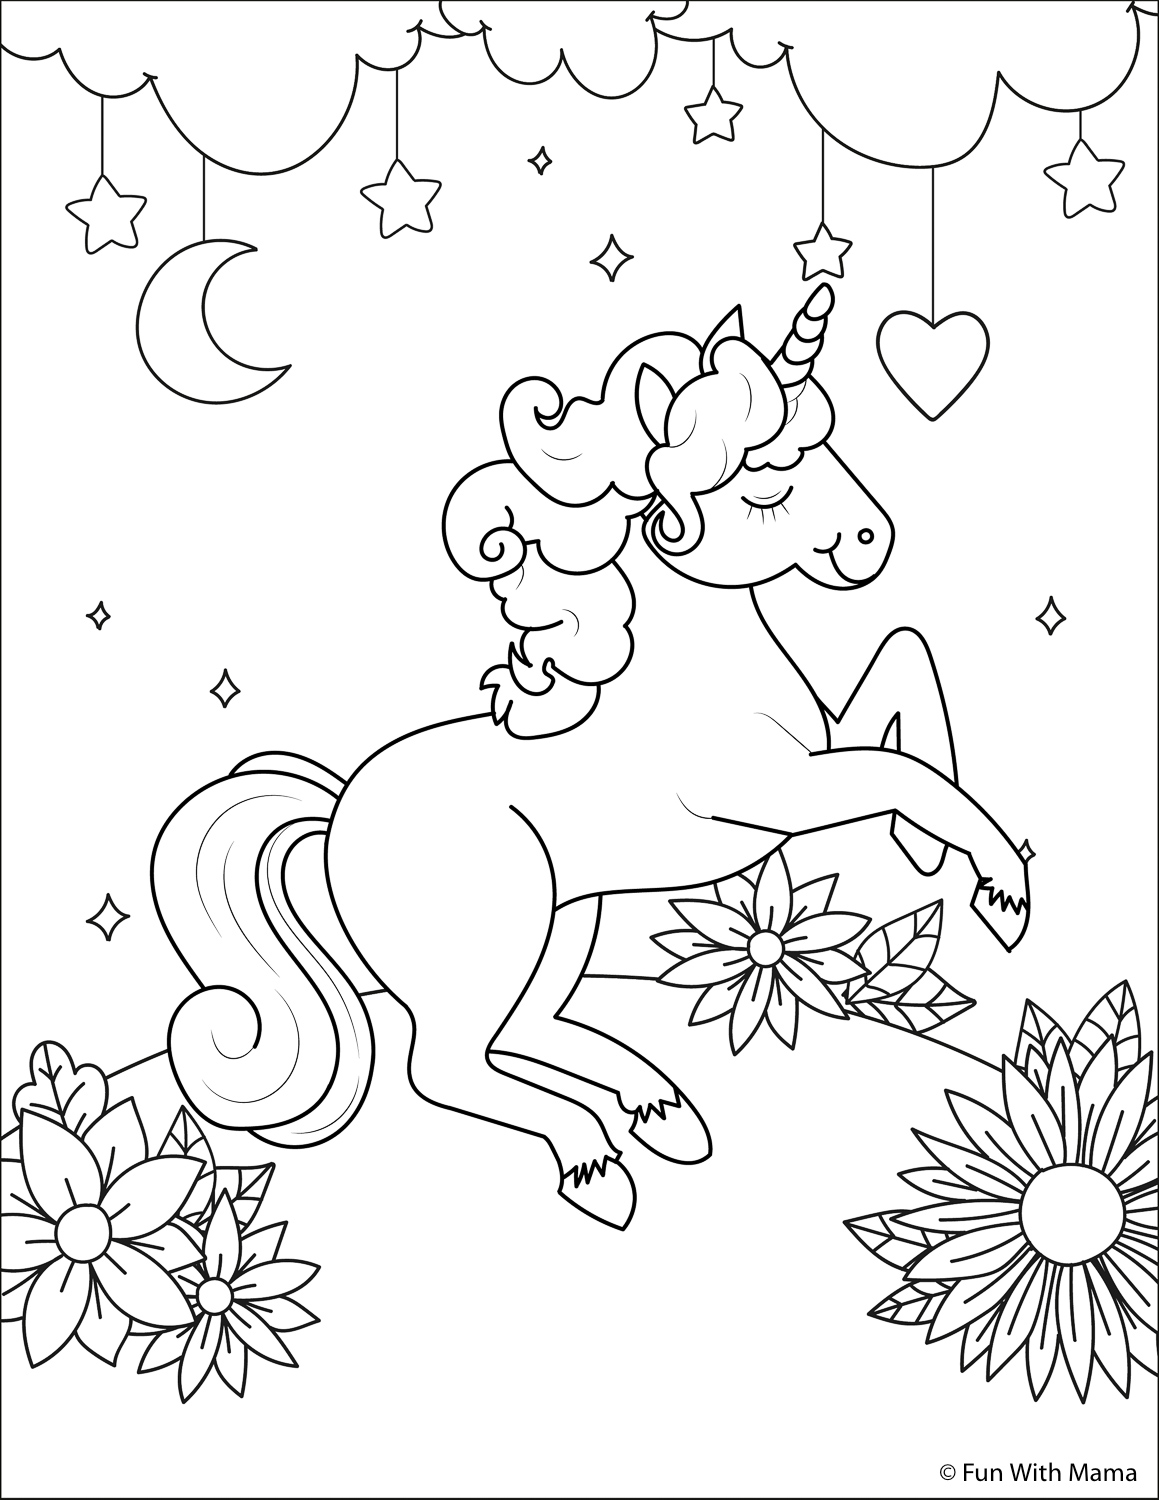 Sleeping Unicorn Coloring Page